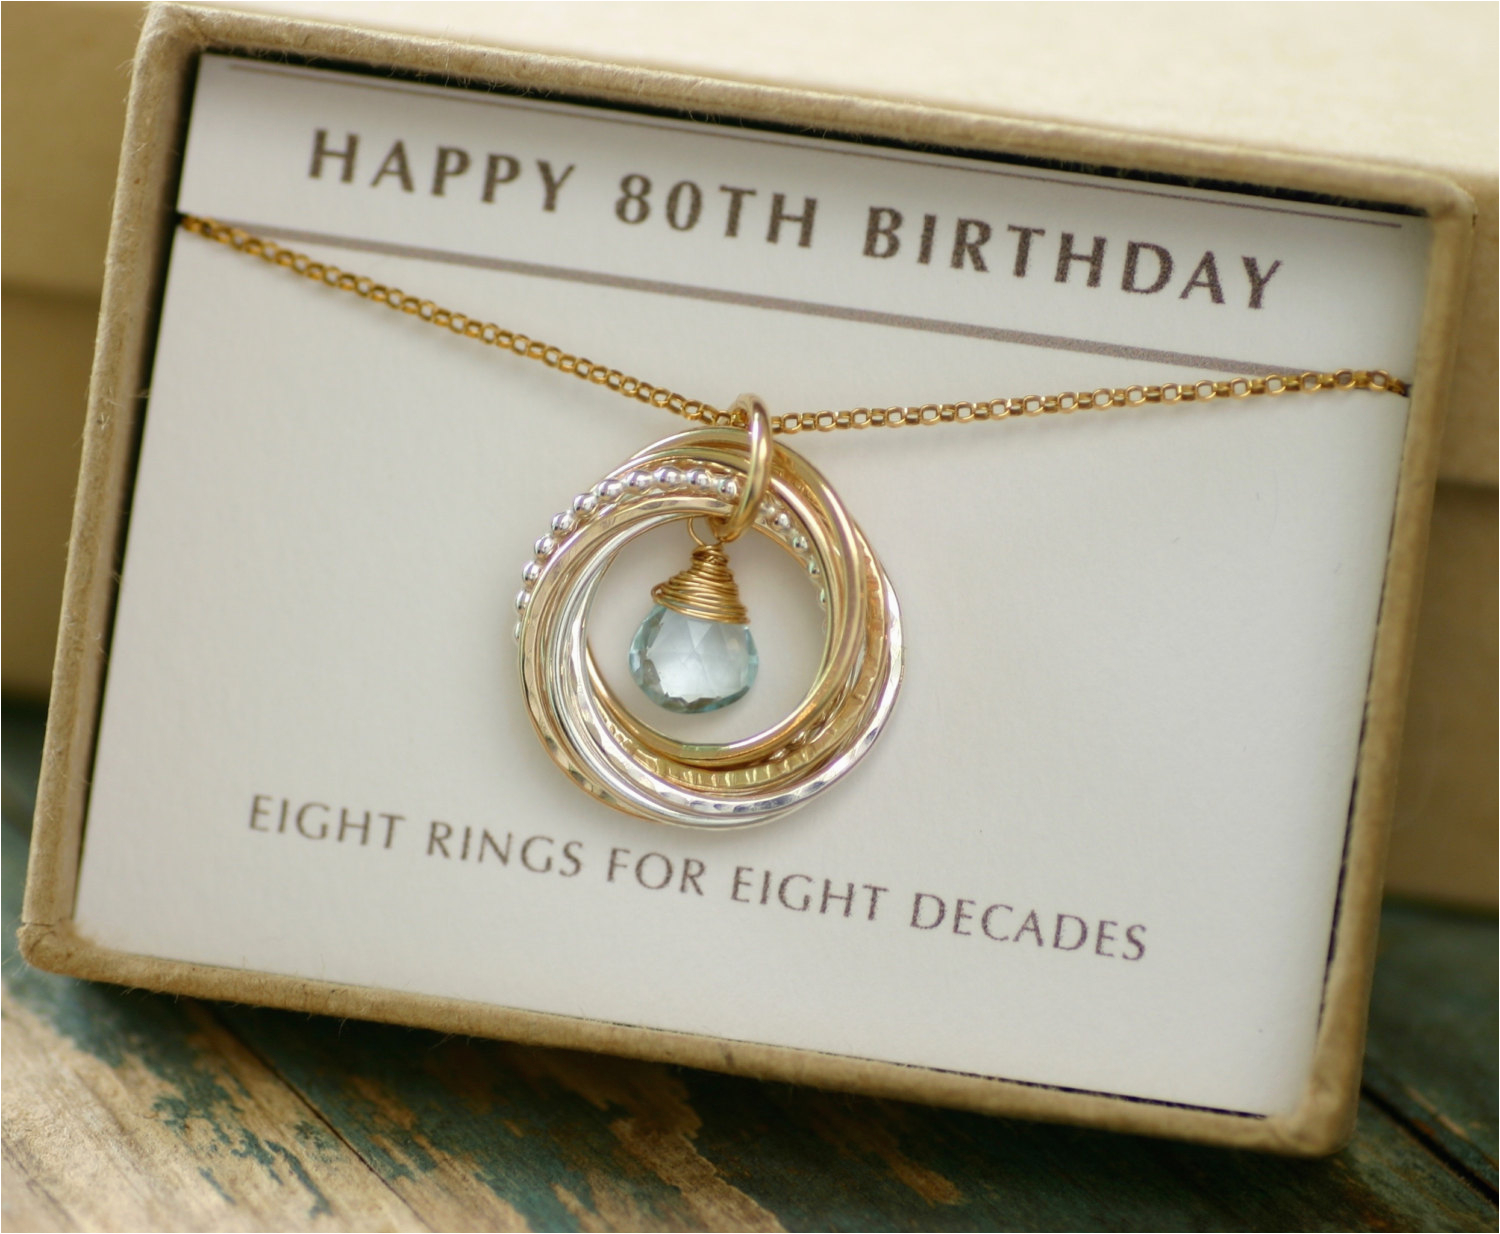 80th-birthday-gift-ideas-for-her-birthdaybuzz